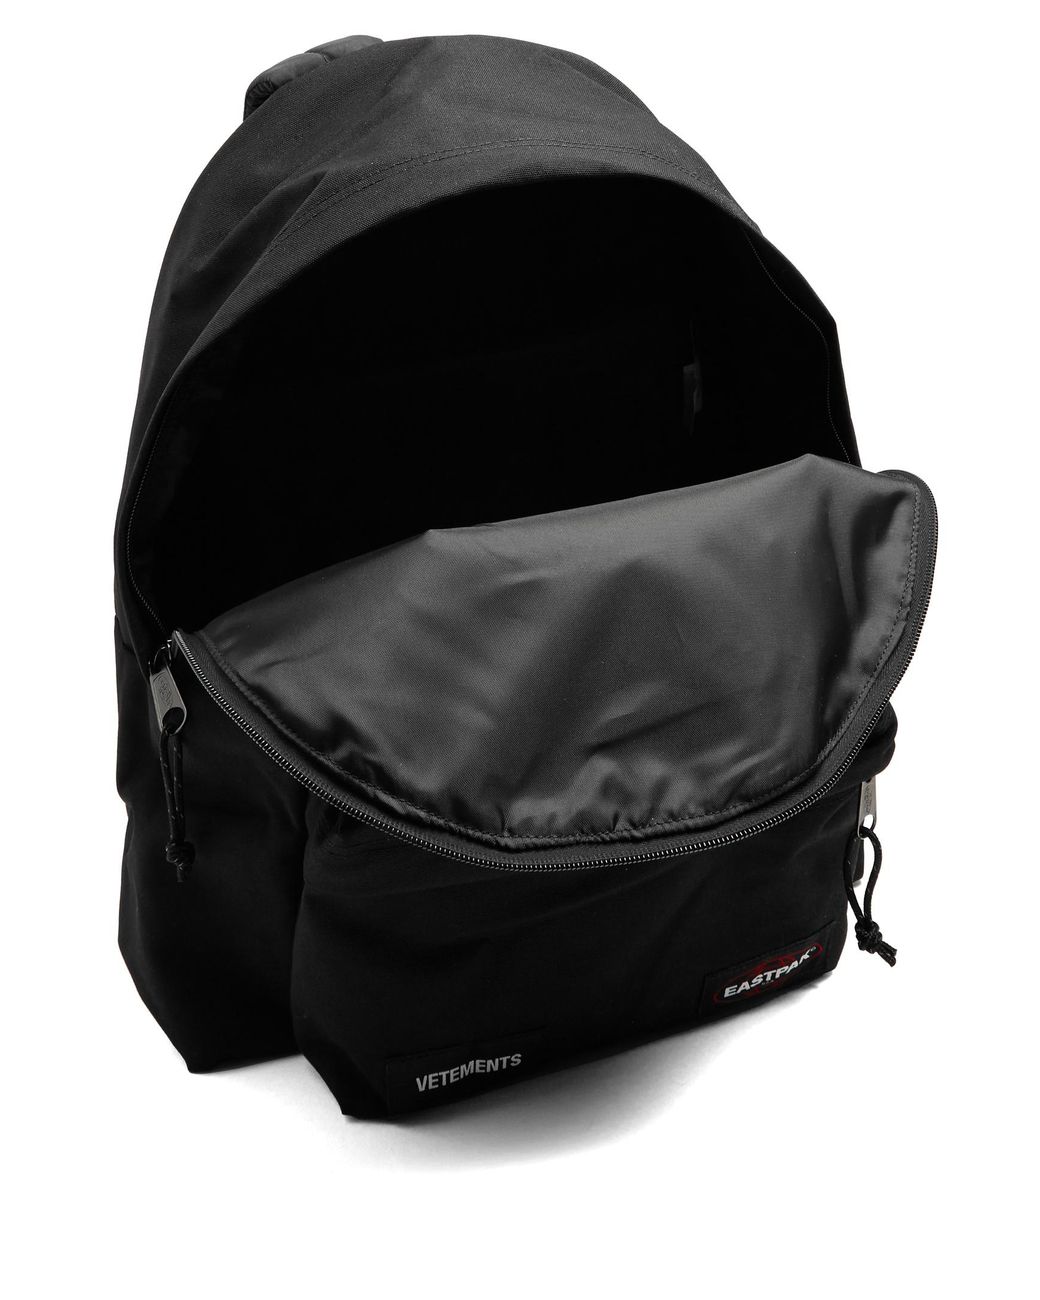 Vetements X Eastpak Oversized Canvas Backpack in Black for Men | Lyst